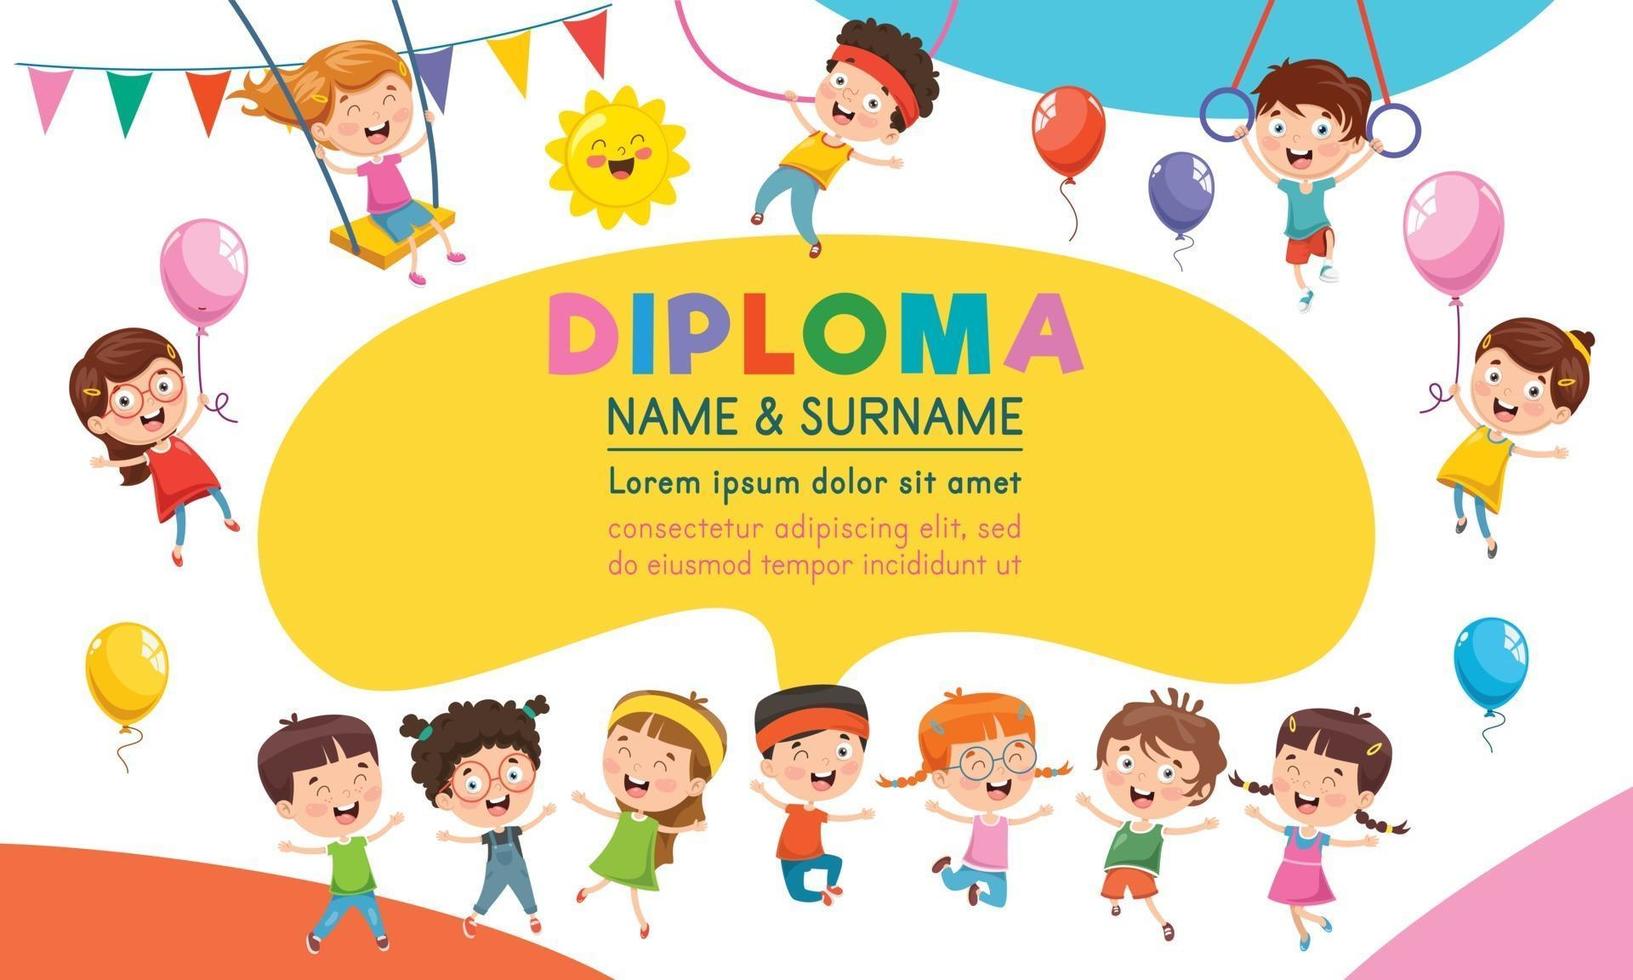 Diploma Certificate Template Design For Children Education vector